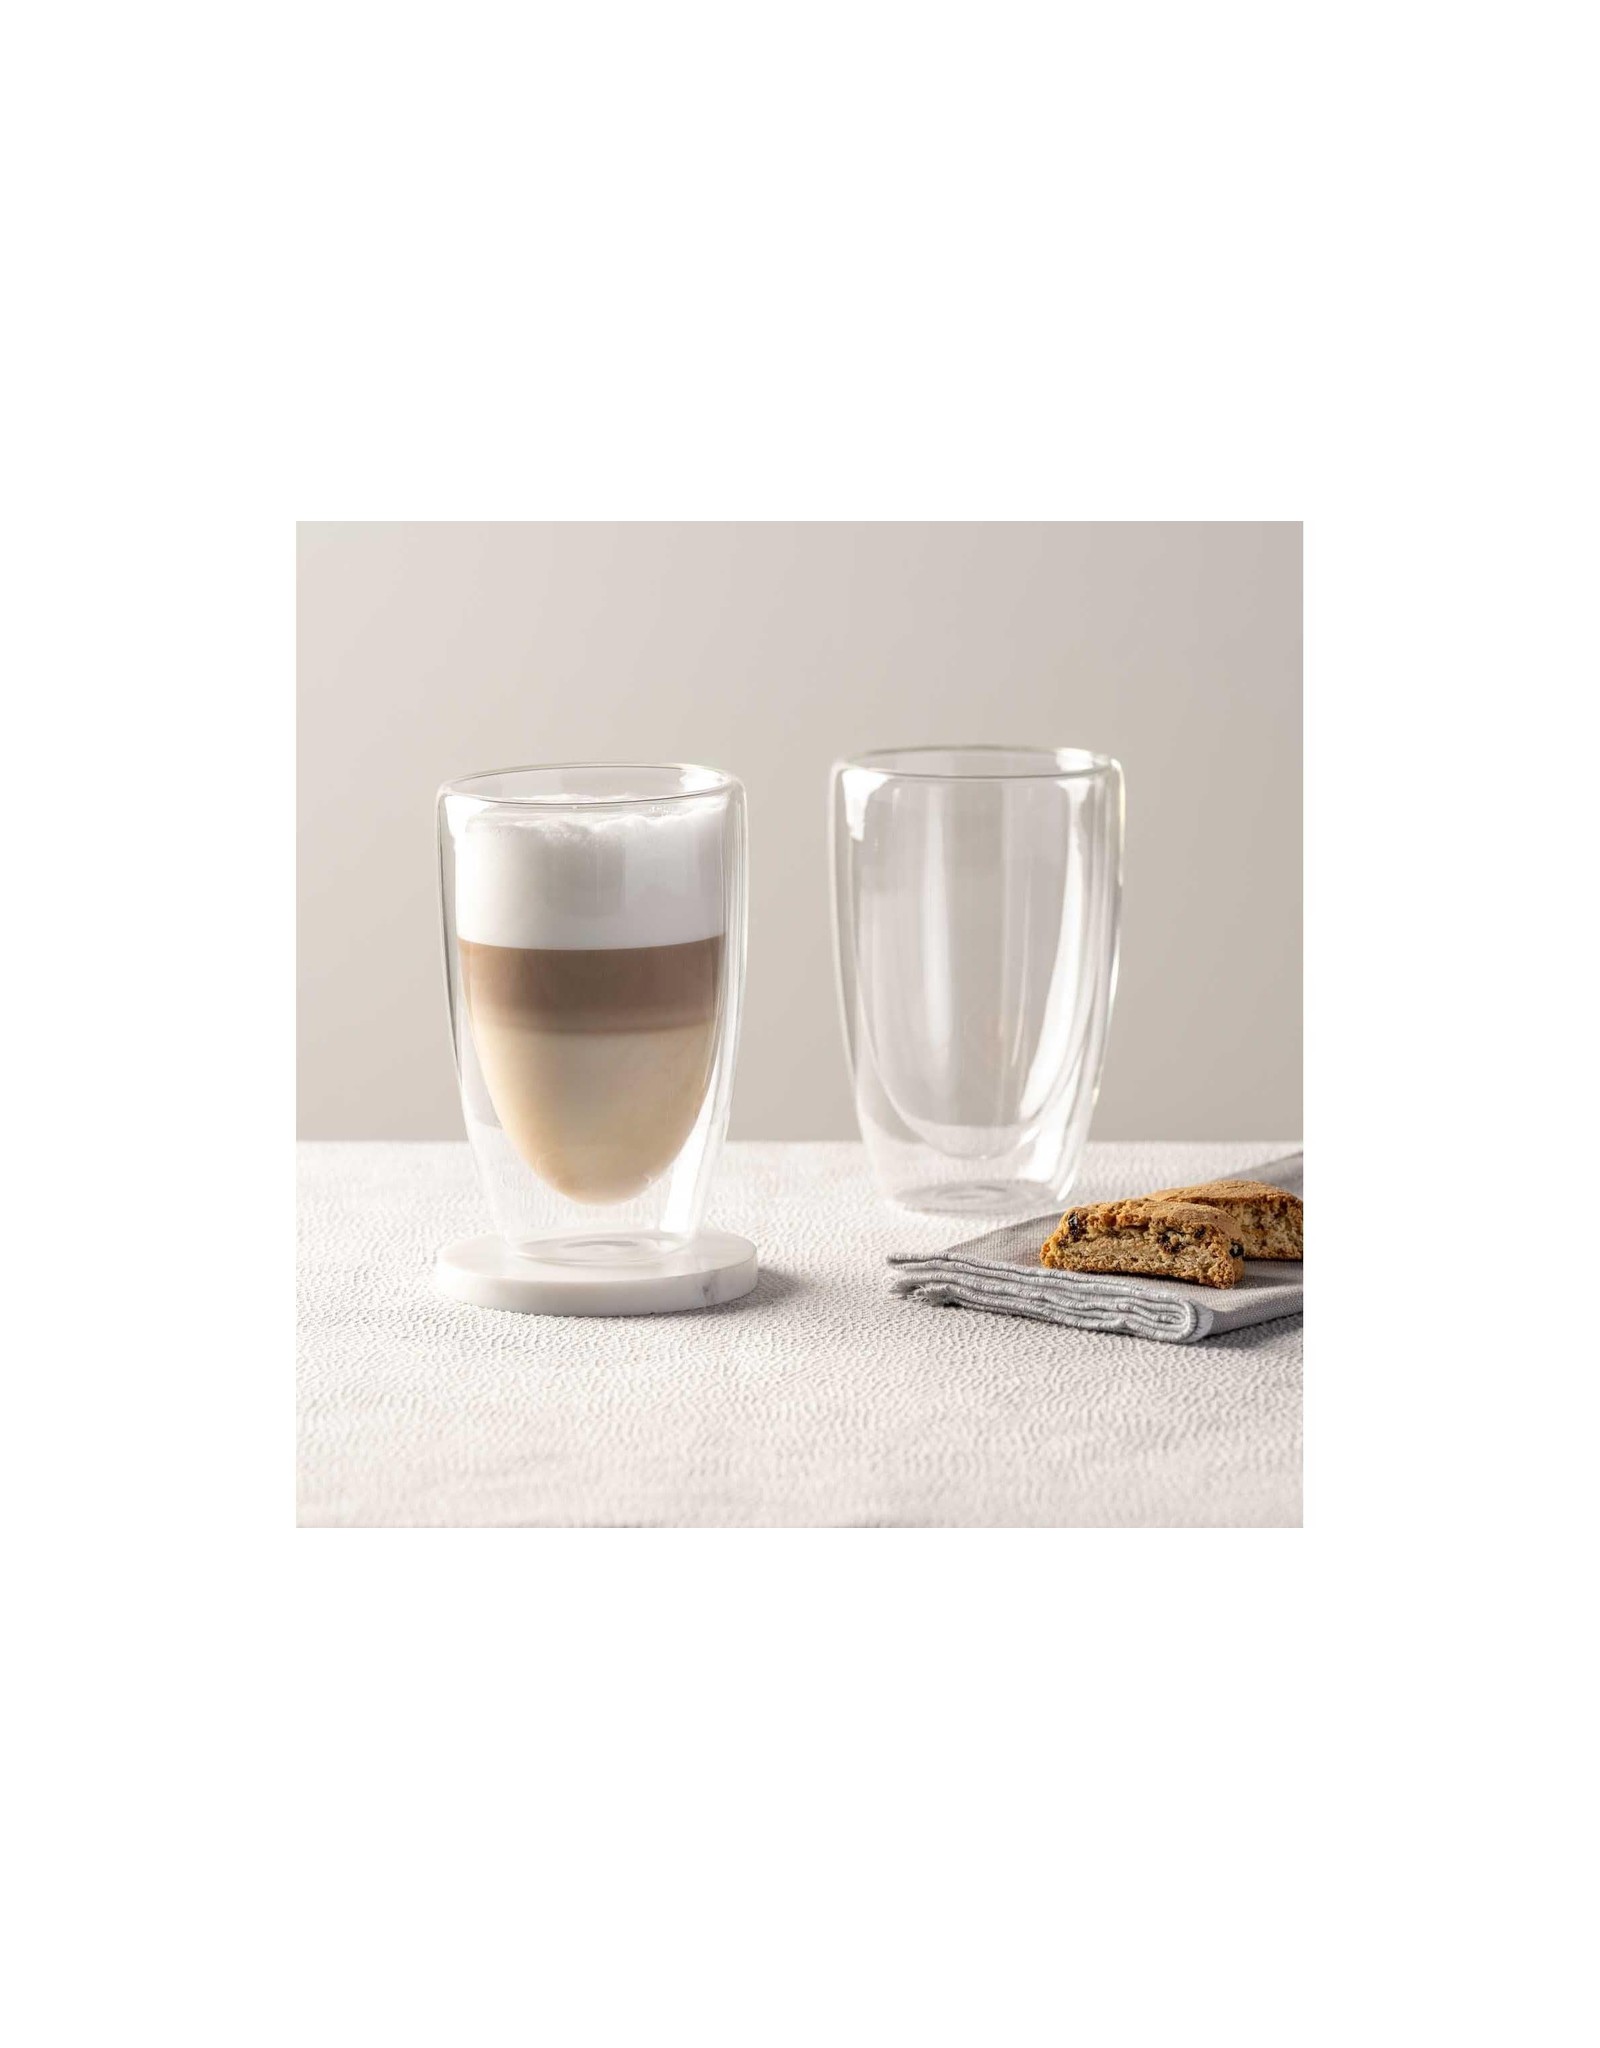 Leonardo Dubbelwandig Latte Macchiato Glas - Set van 2 - DUO - 400ml